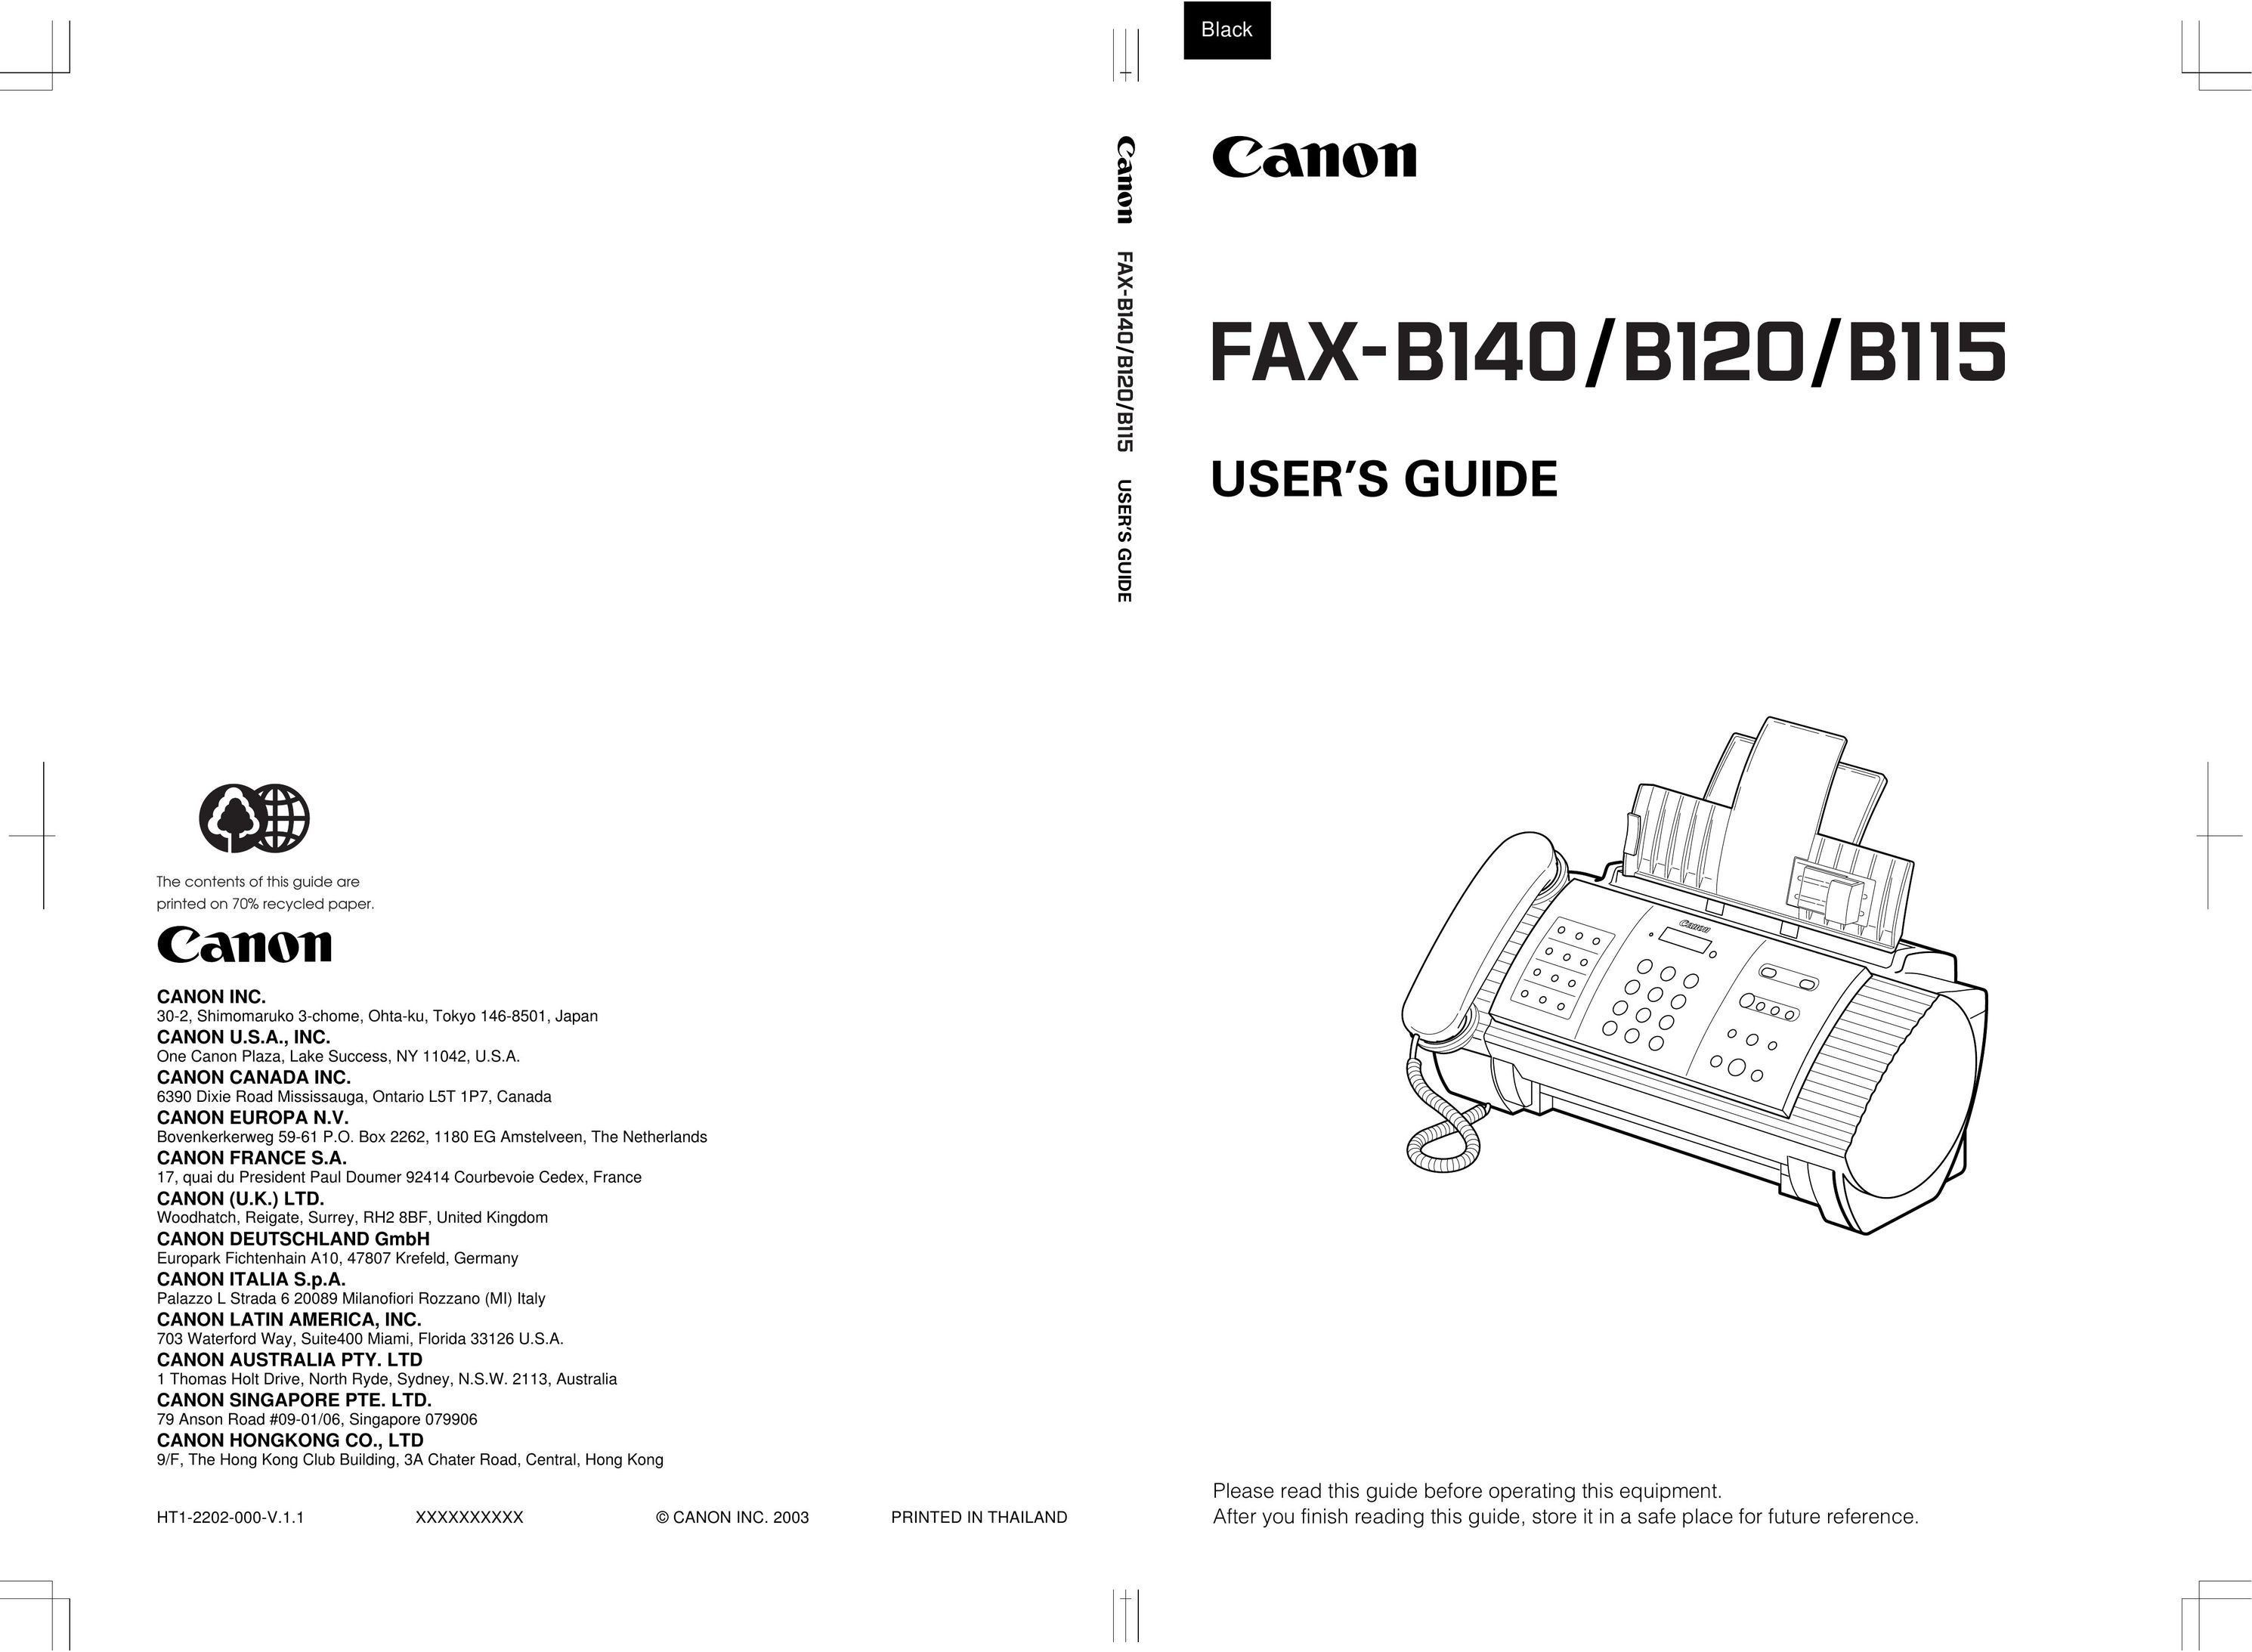 Sony FAX-B140 Fax Machine User Manual